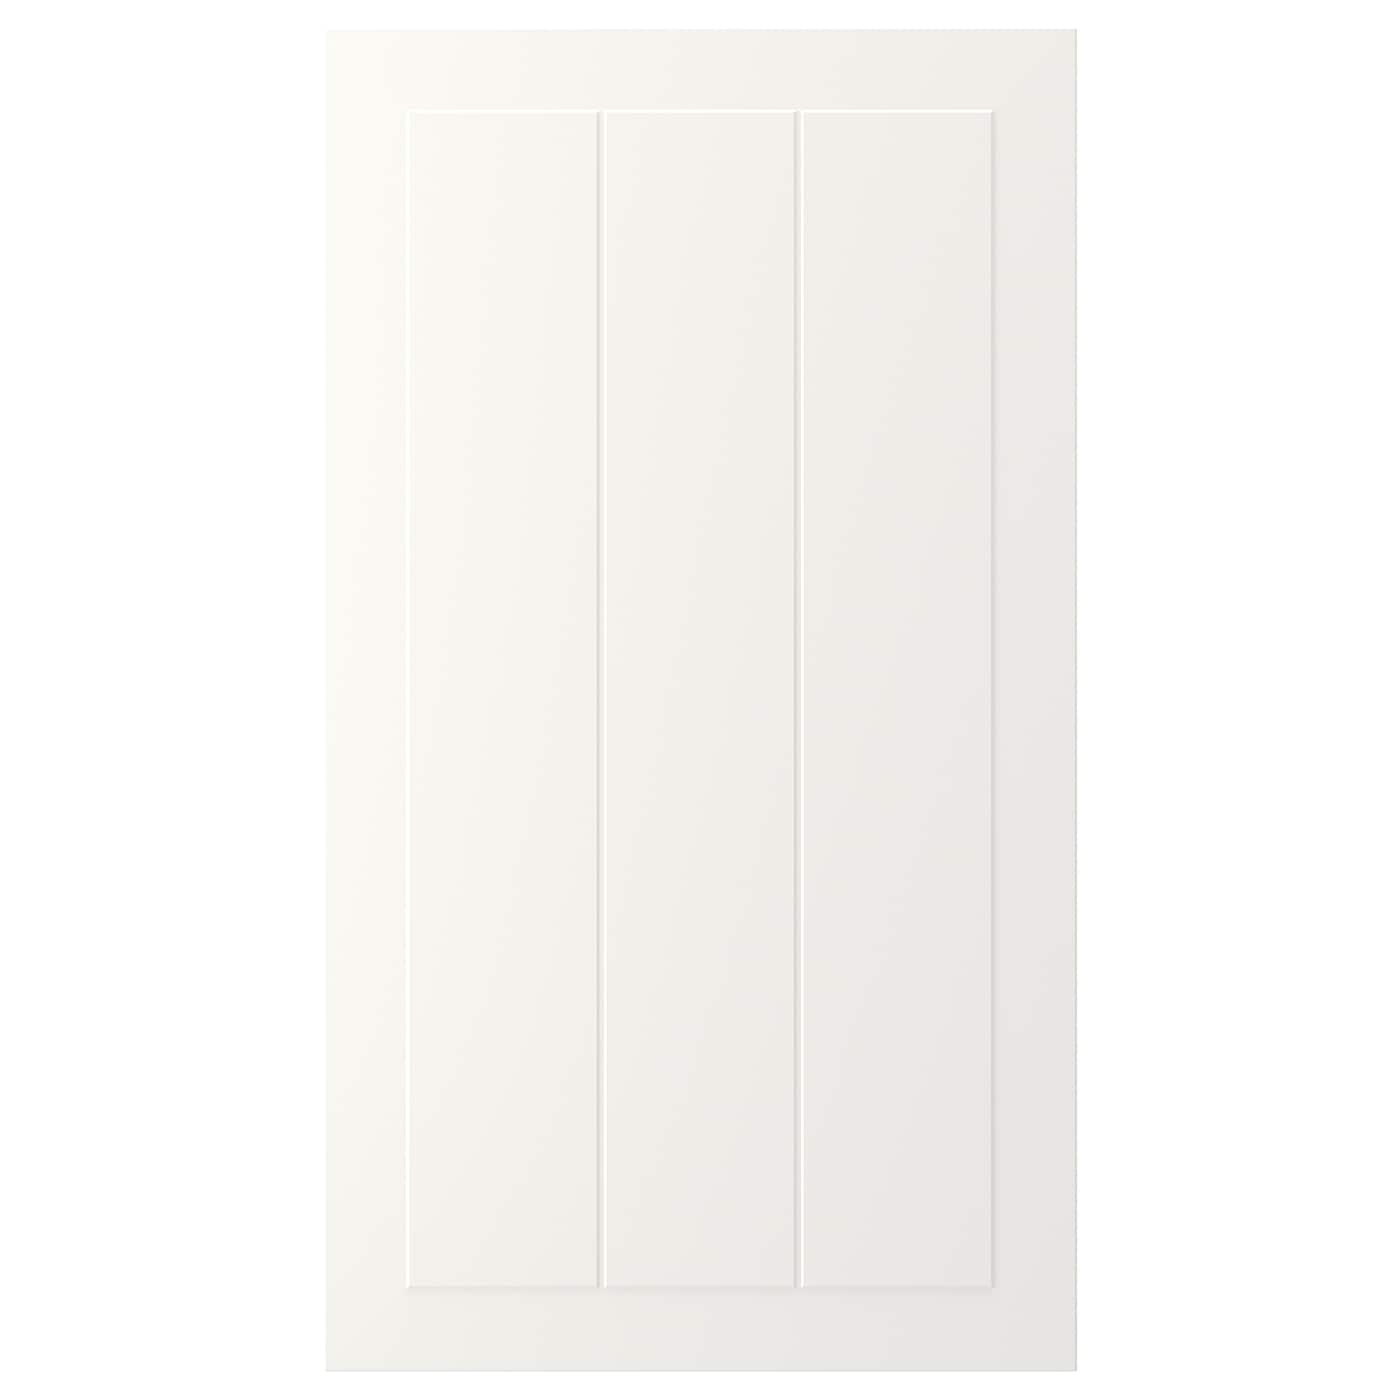 Фасад для посудомоечной машины - IKEA STENSUND, 80х45 см, белый, СТЕНСУНД ИКЕА